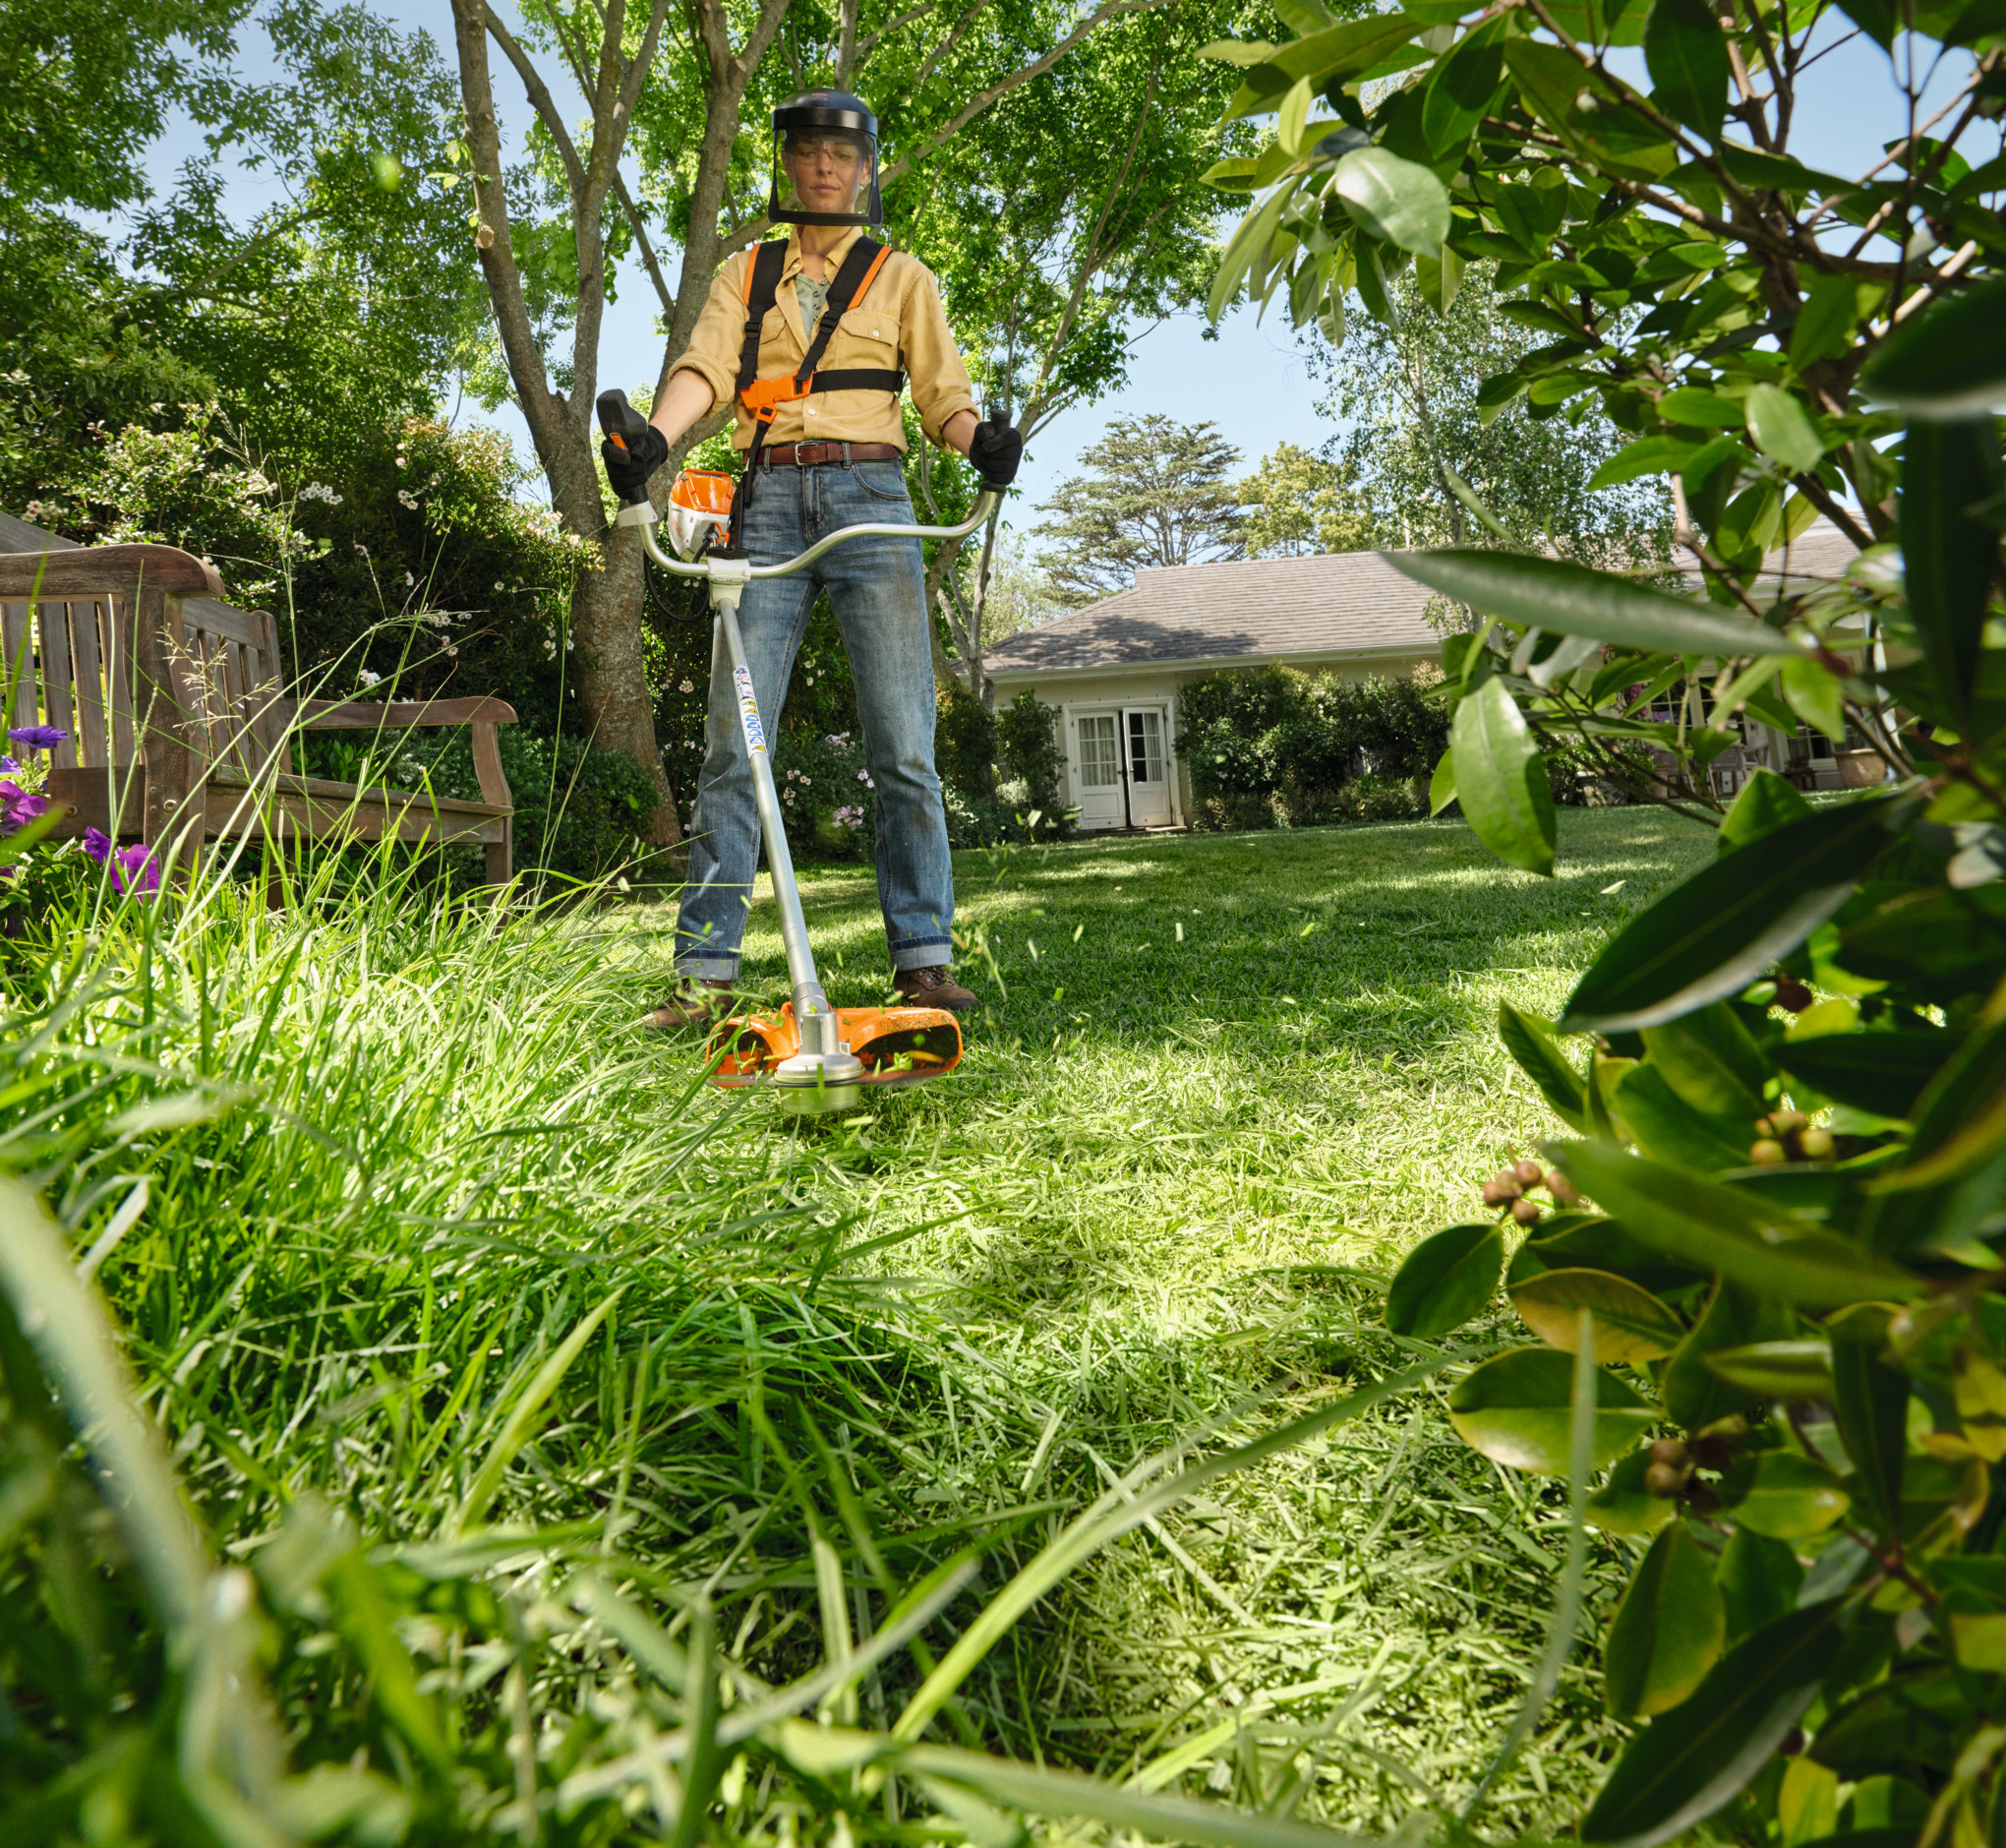 En person trimmar gräs med en batteritrimmer